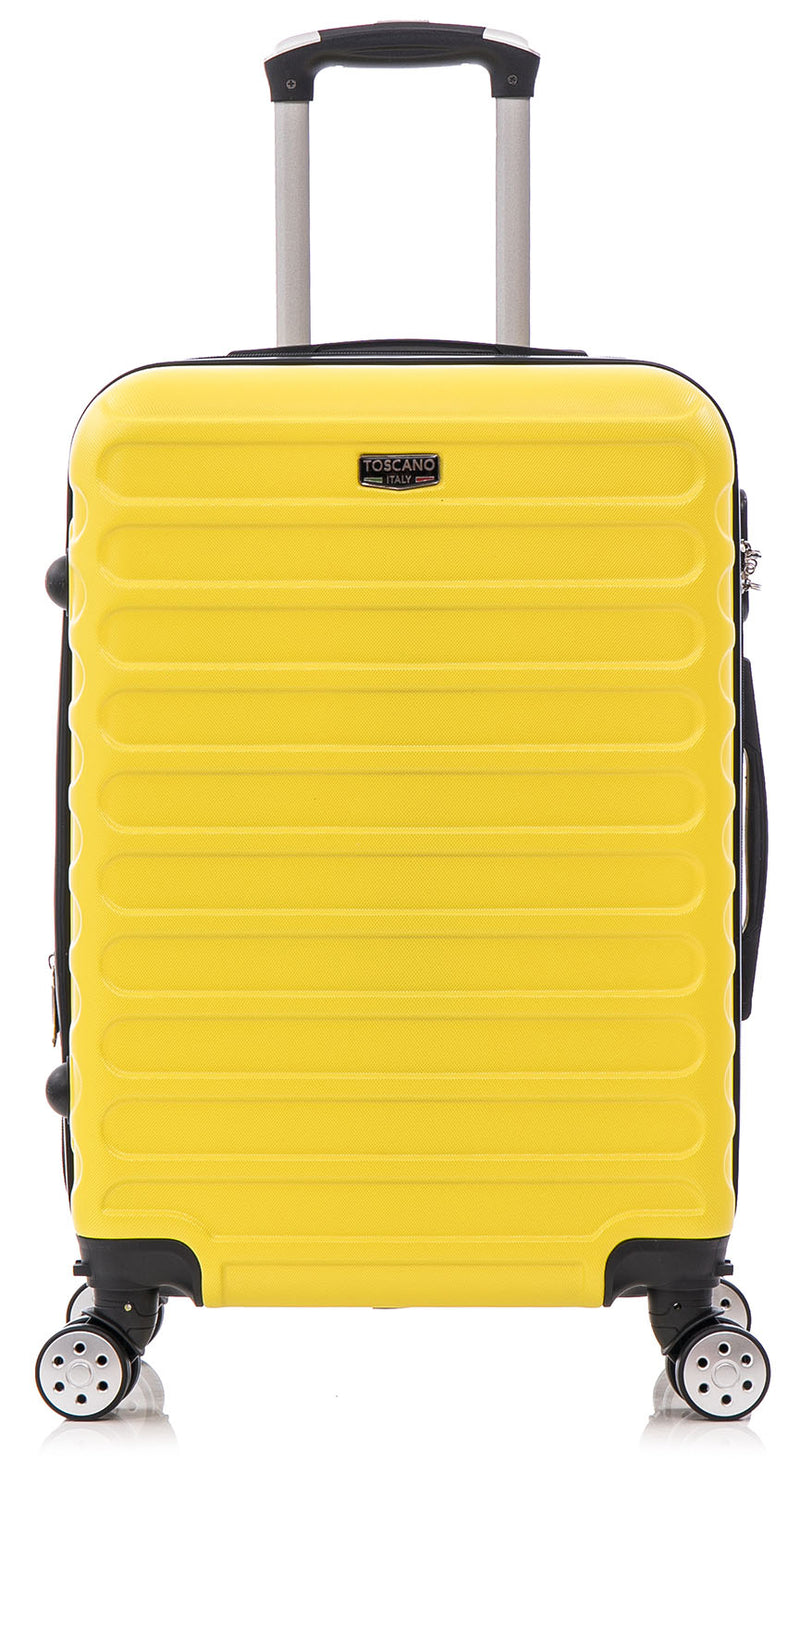 TOSCANO RADIOSITA 30" Hardside Lightweight Suitcase Luggage